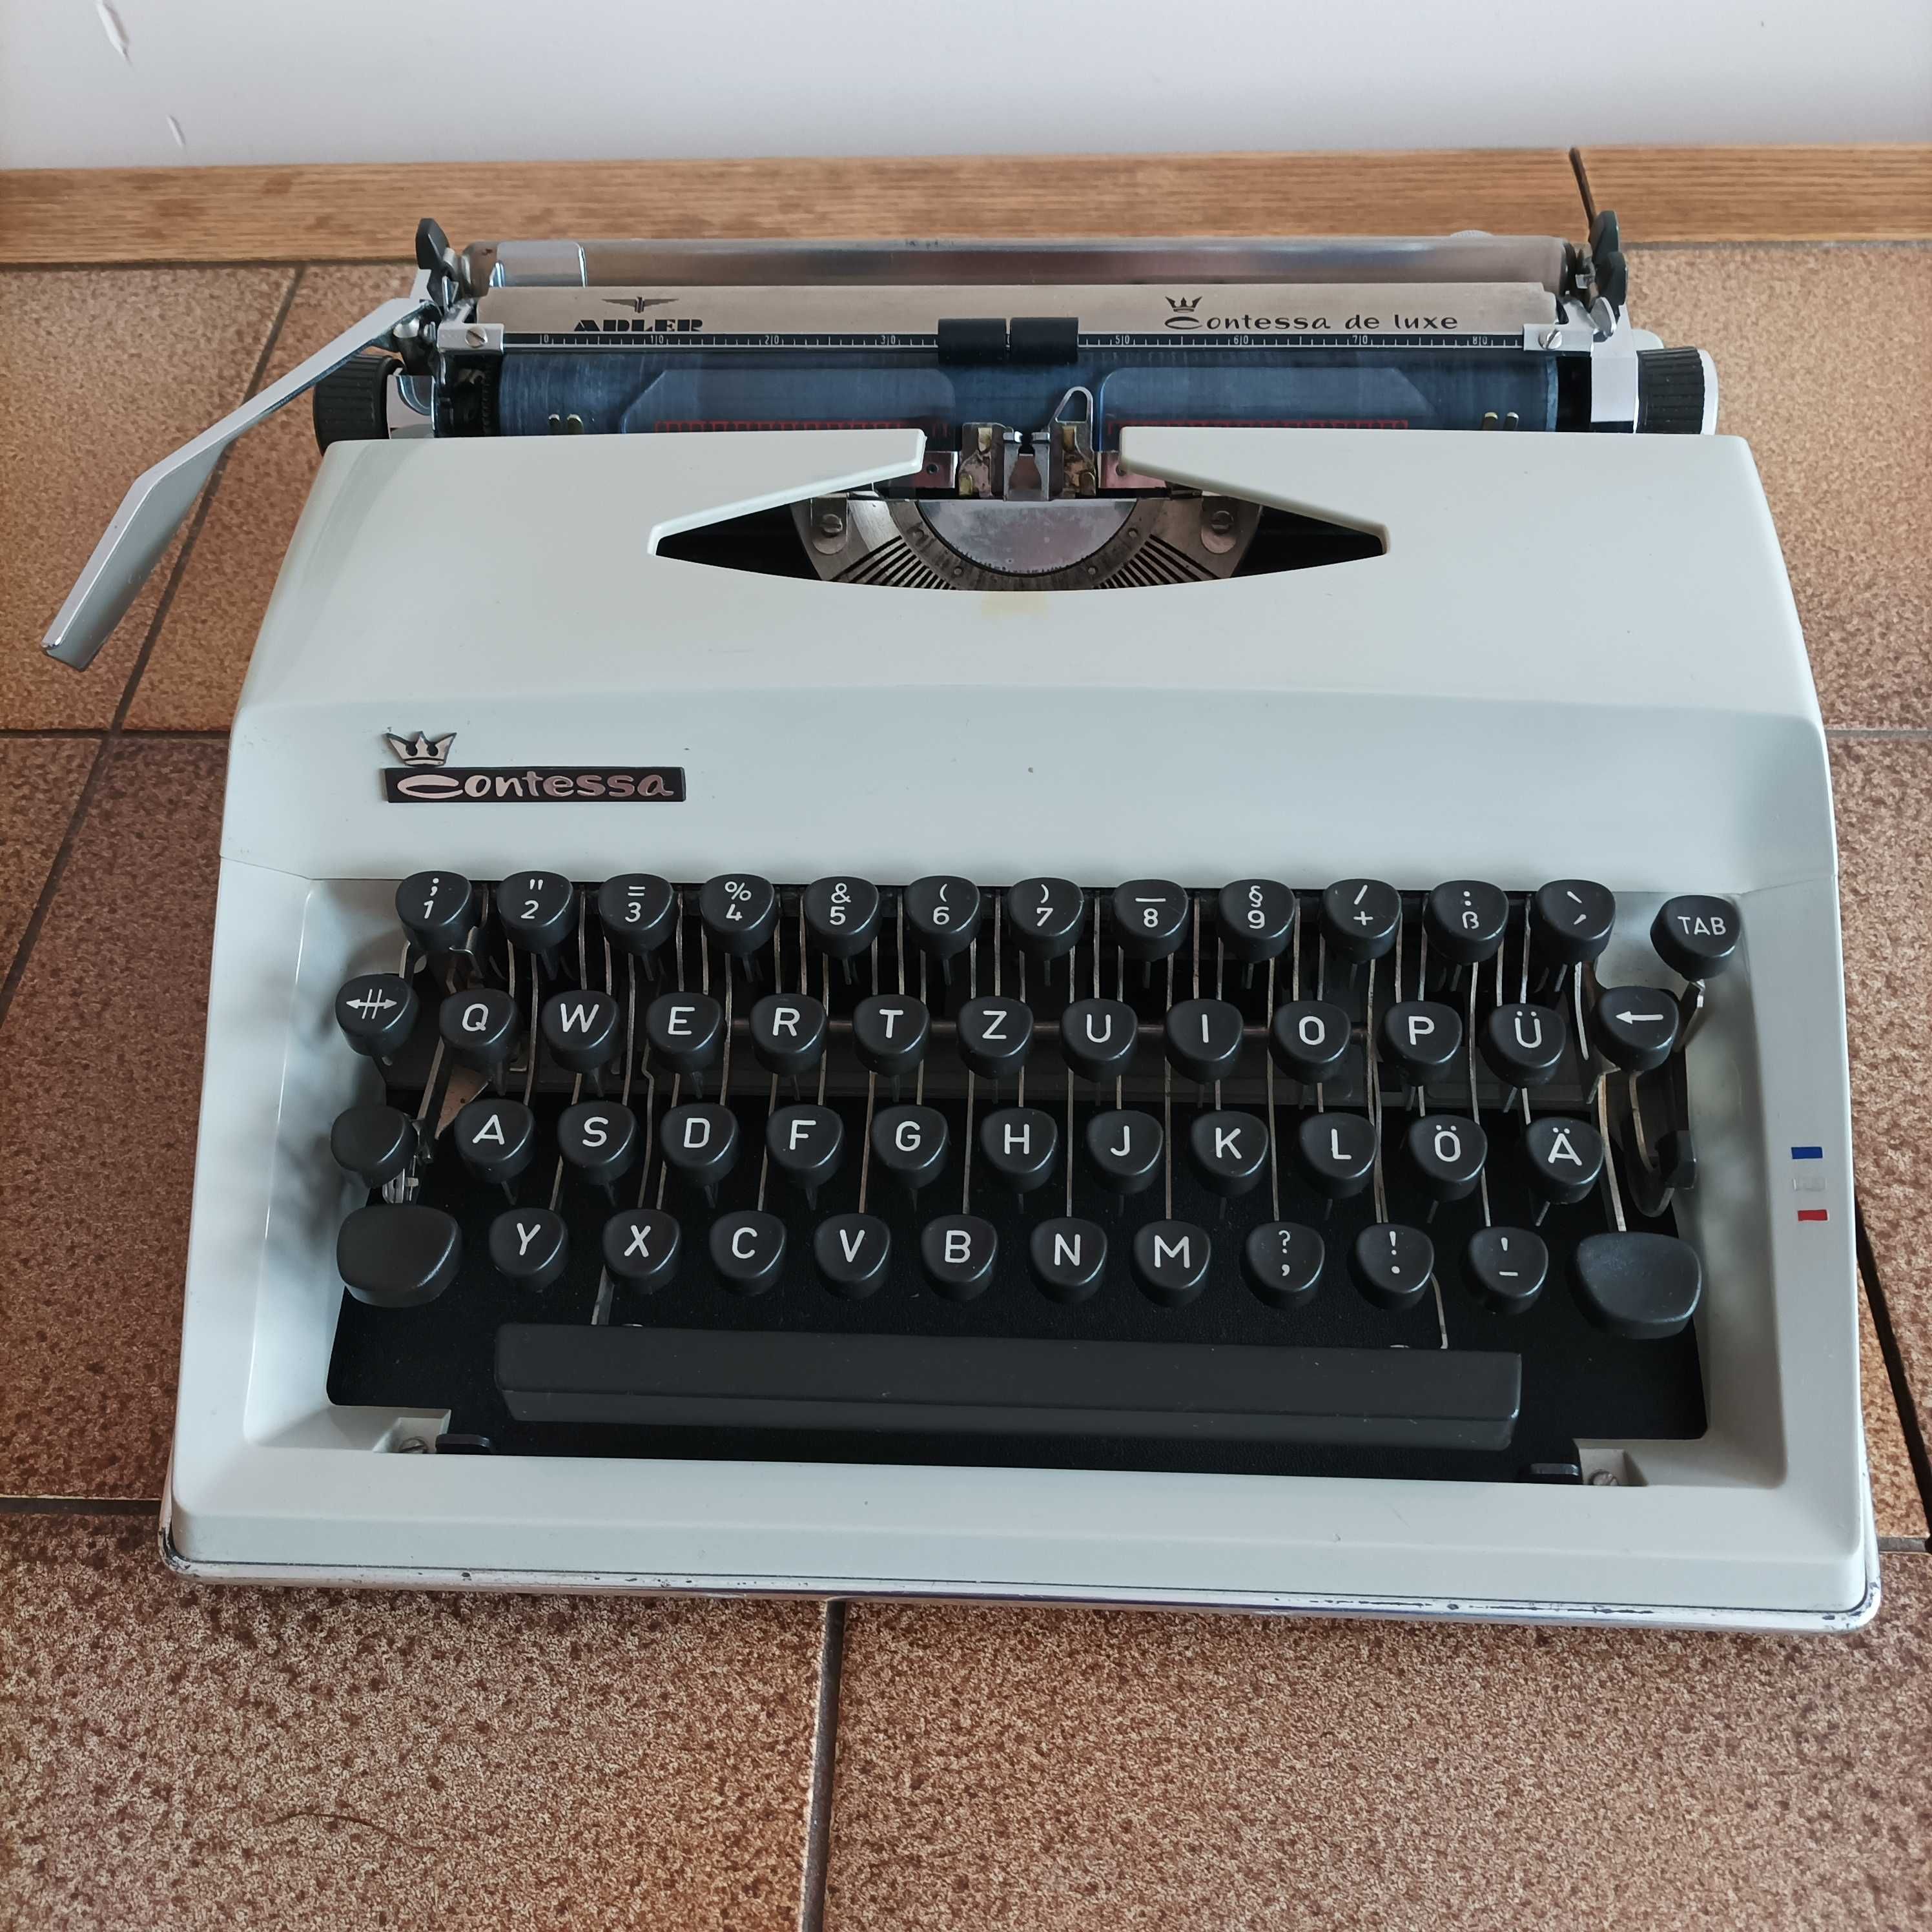 Stara walizkowa maszyna do pisania Adler Contenssa de luxe.